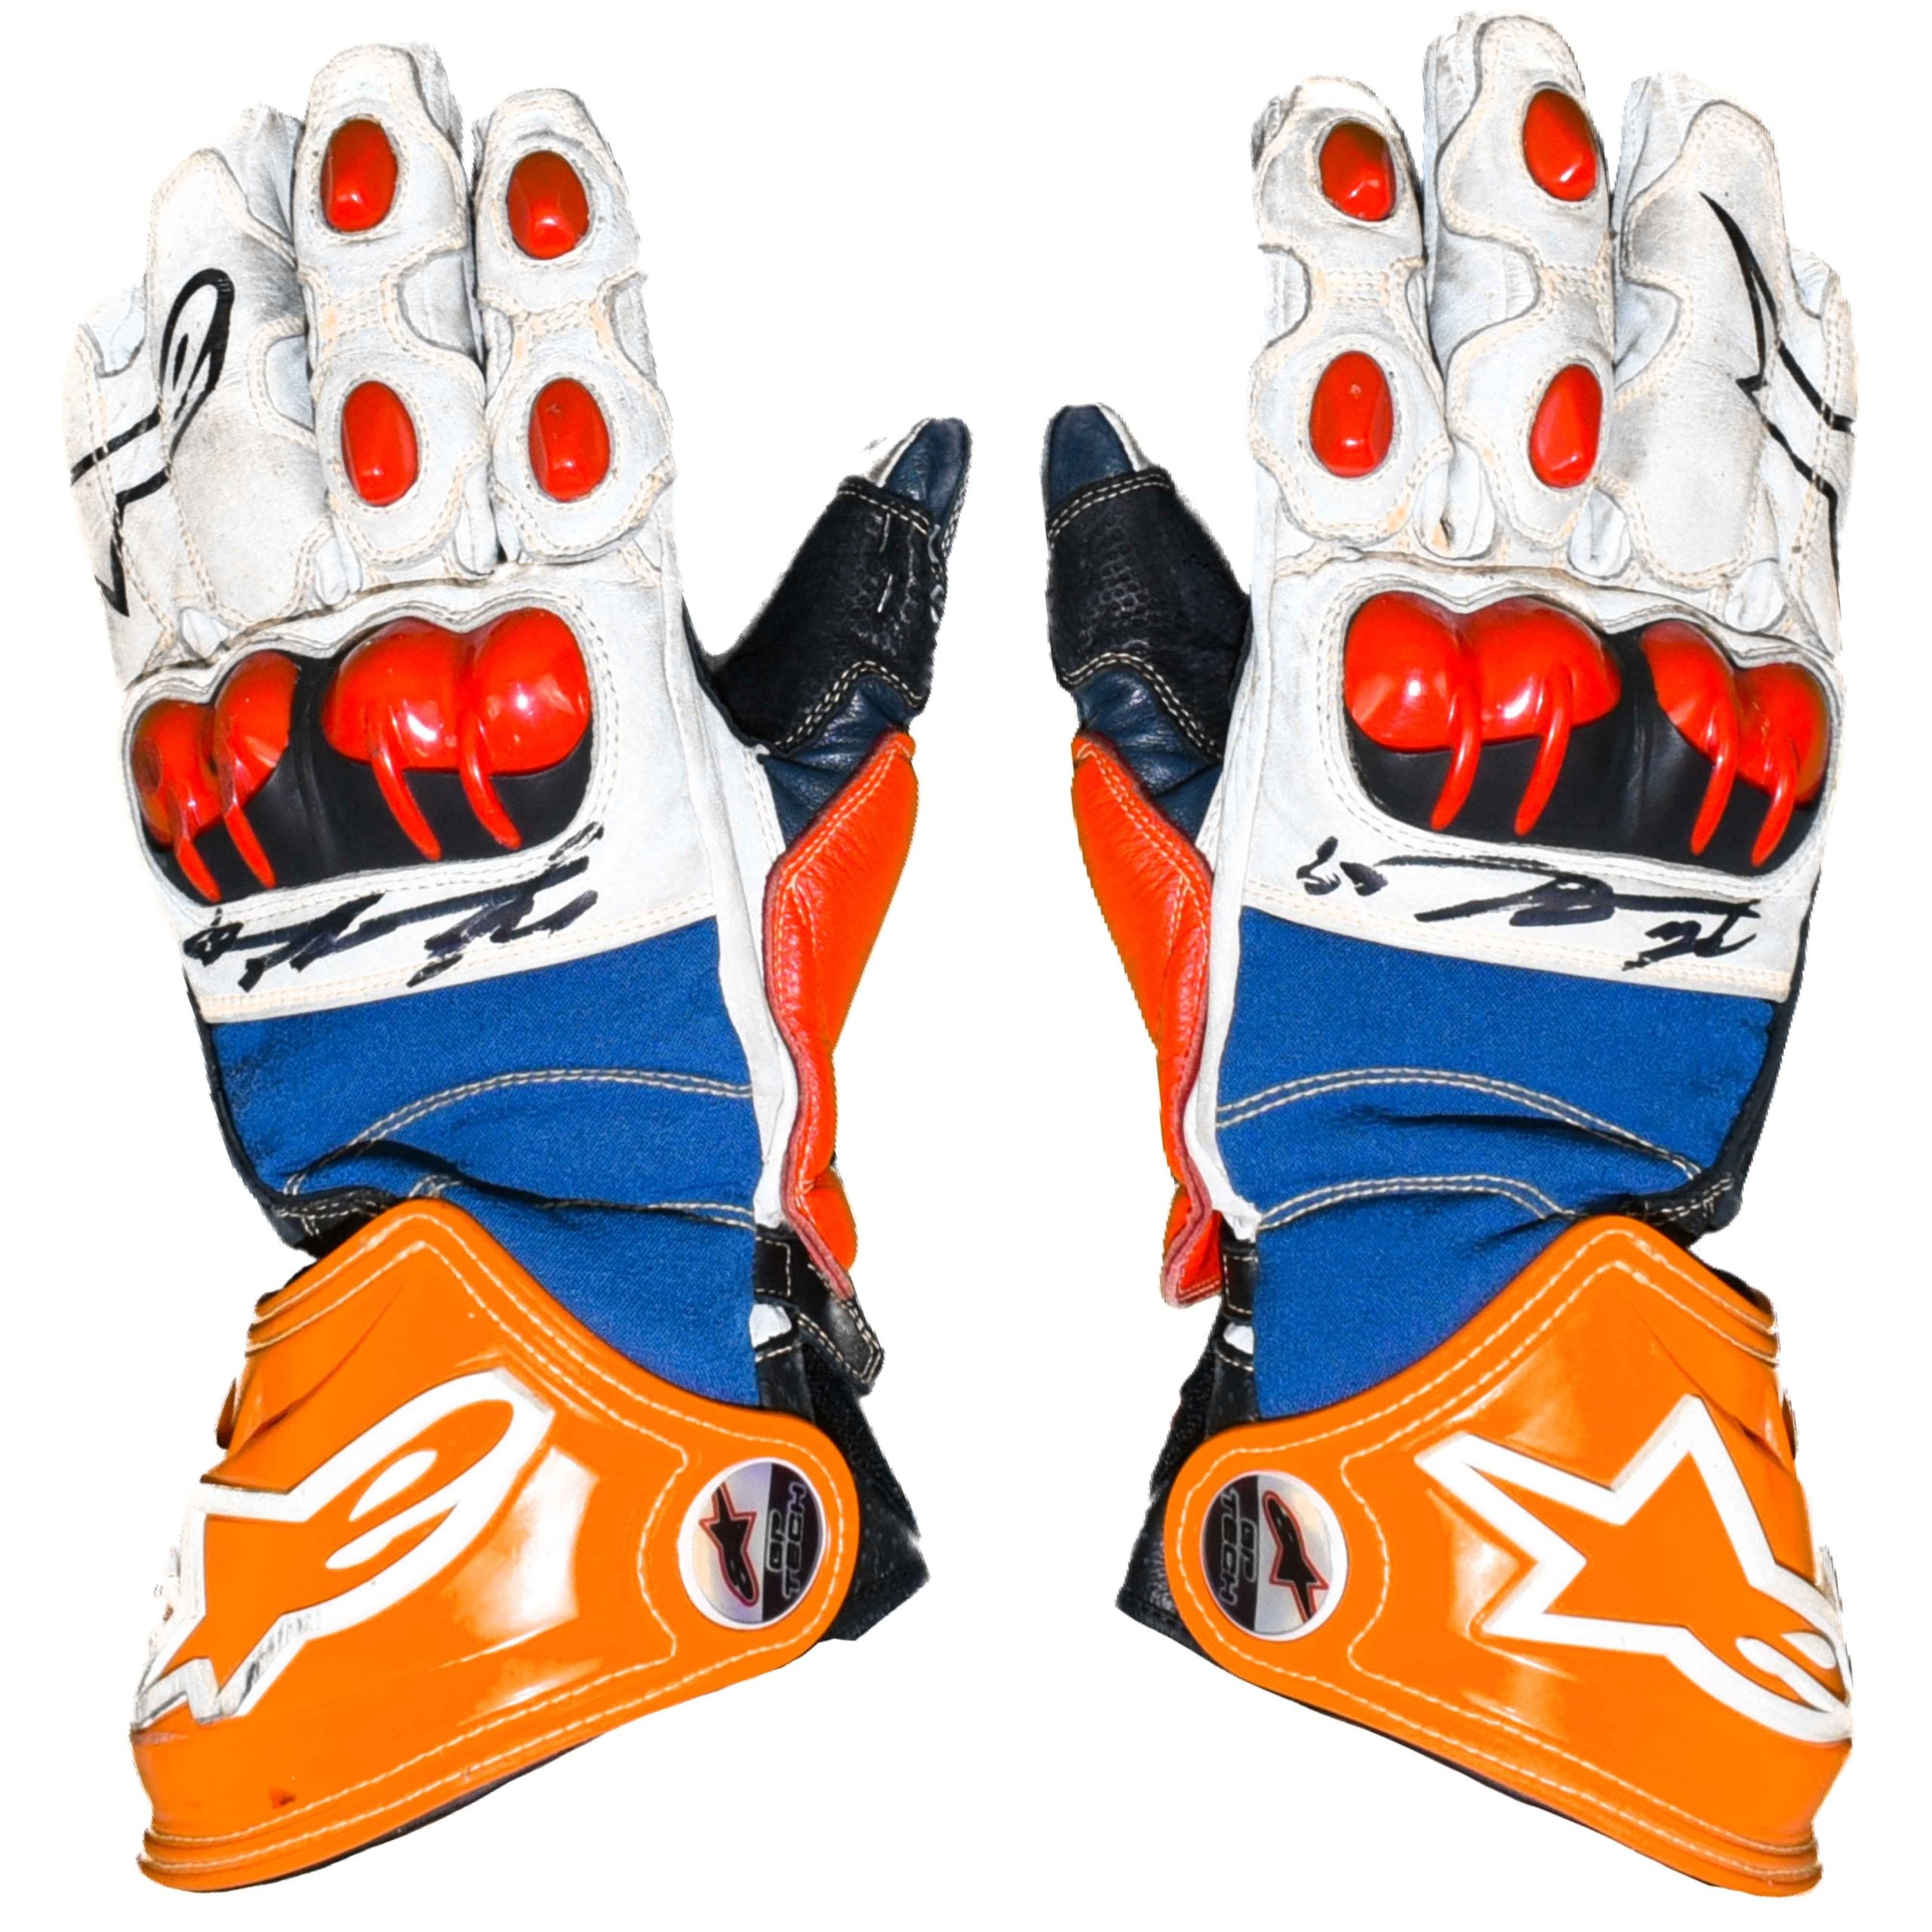 2004 Nicky Hayden Signed Race Used Repsol Honda MotoGP Gloves